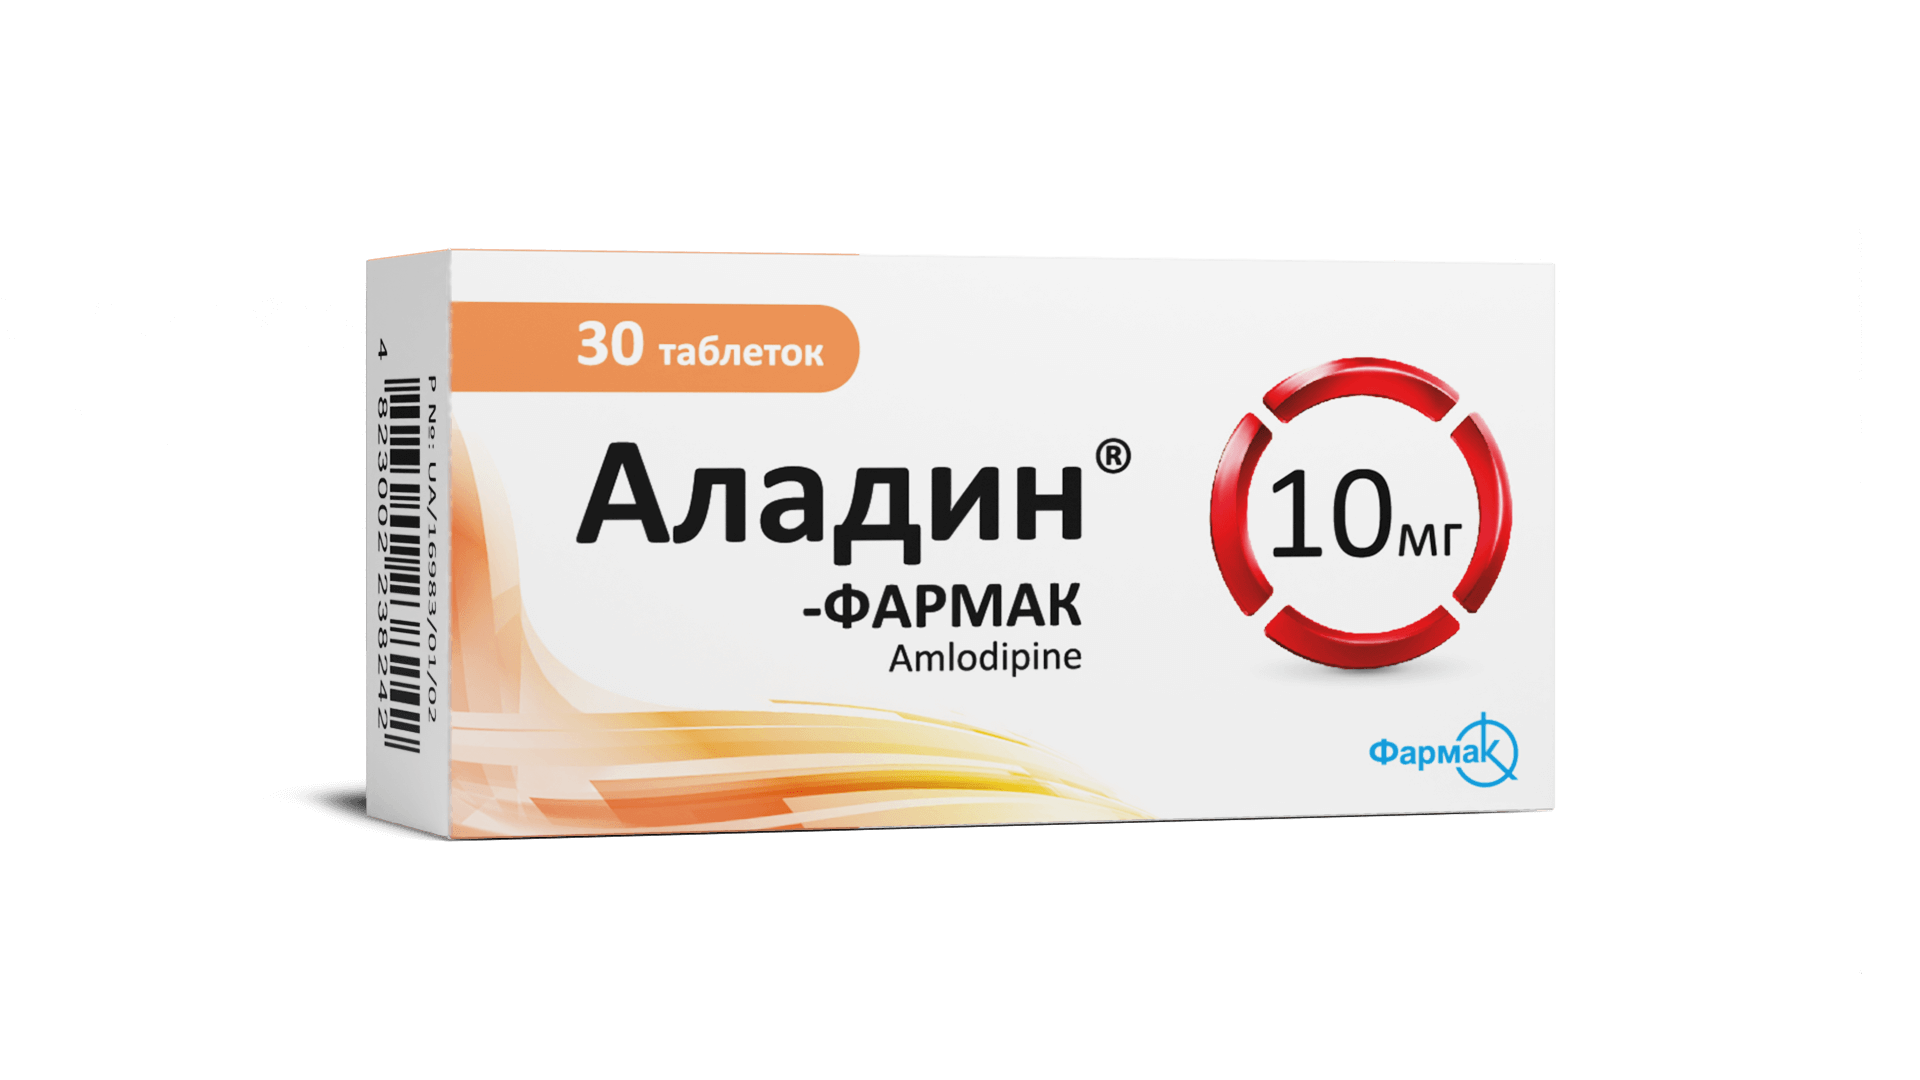 Аладин — Фармак 10 мг (1)